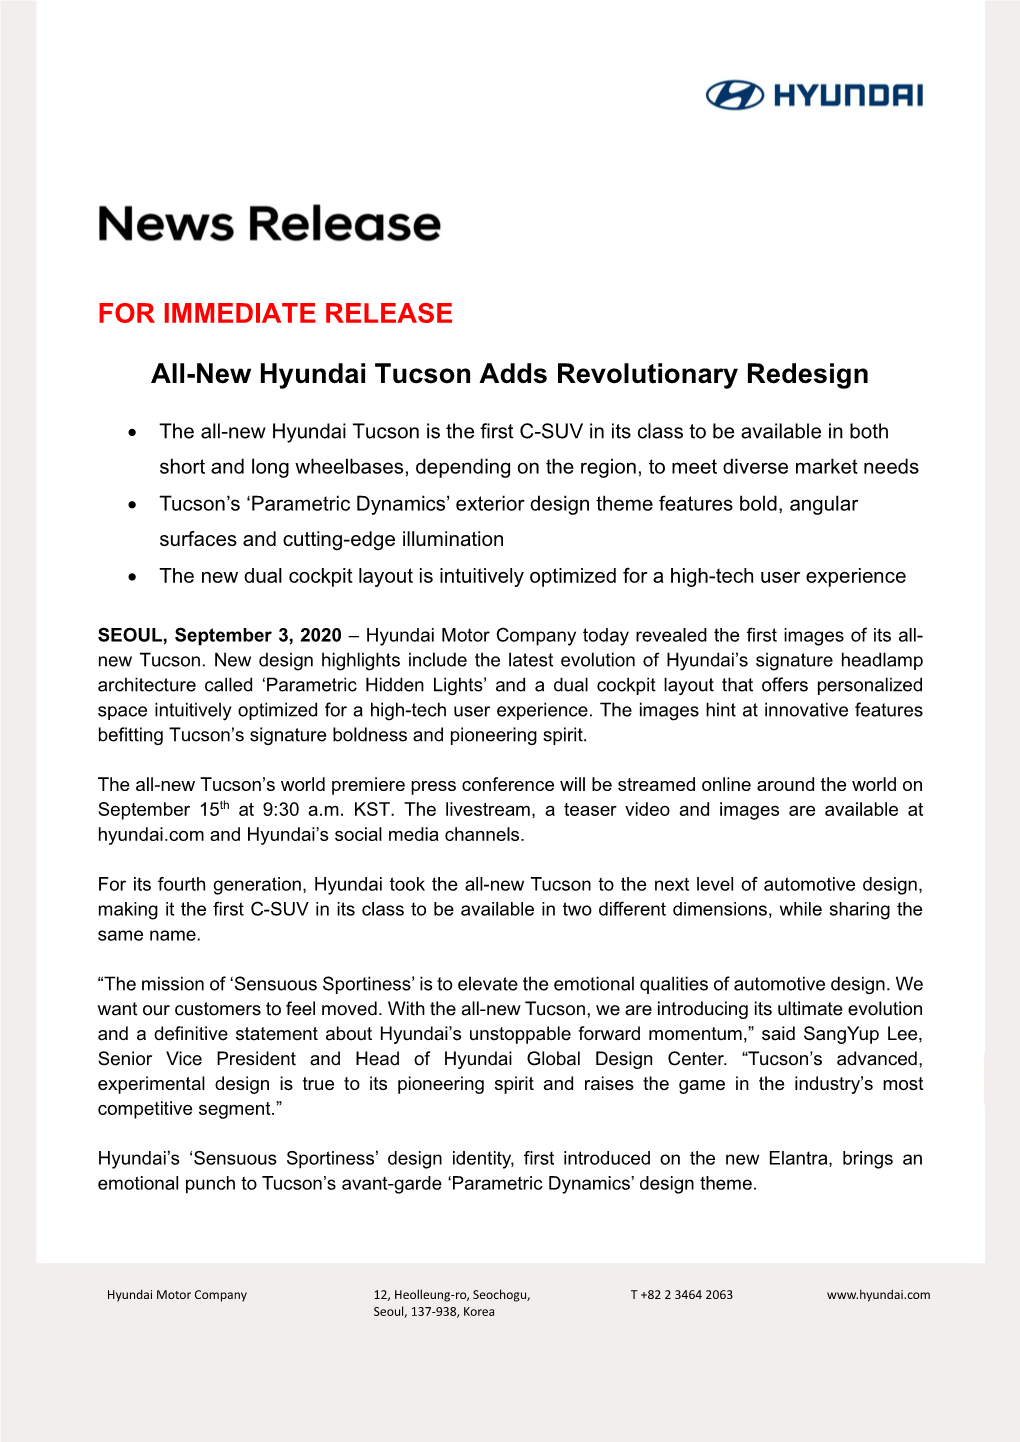 FOR IMMEDIATE RELEASE All-New Hyundai Tucson Adds